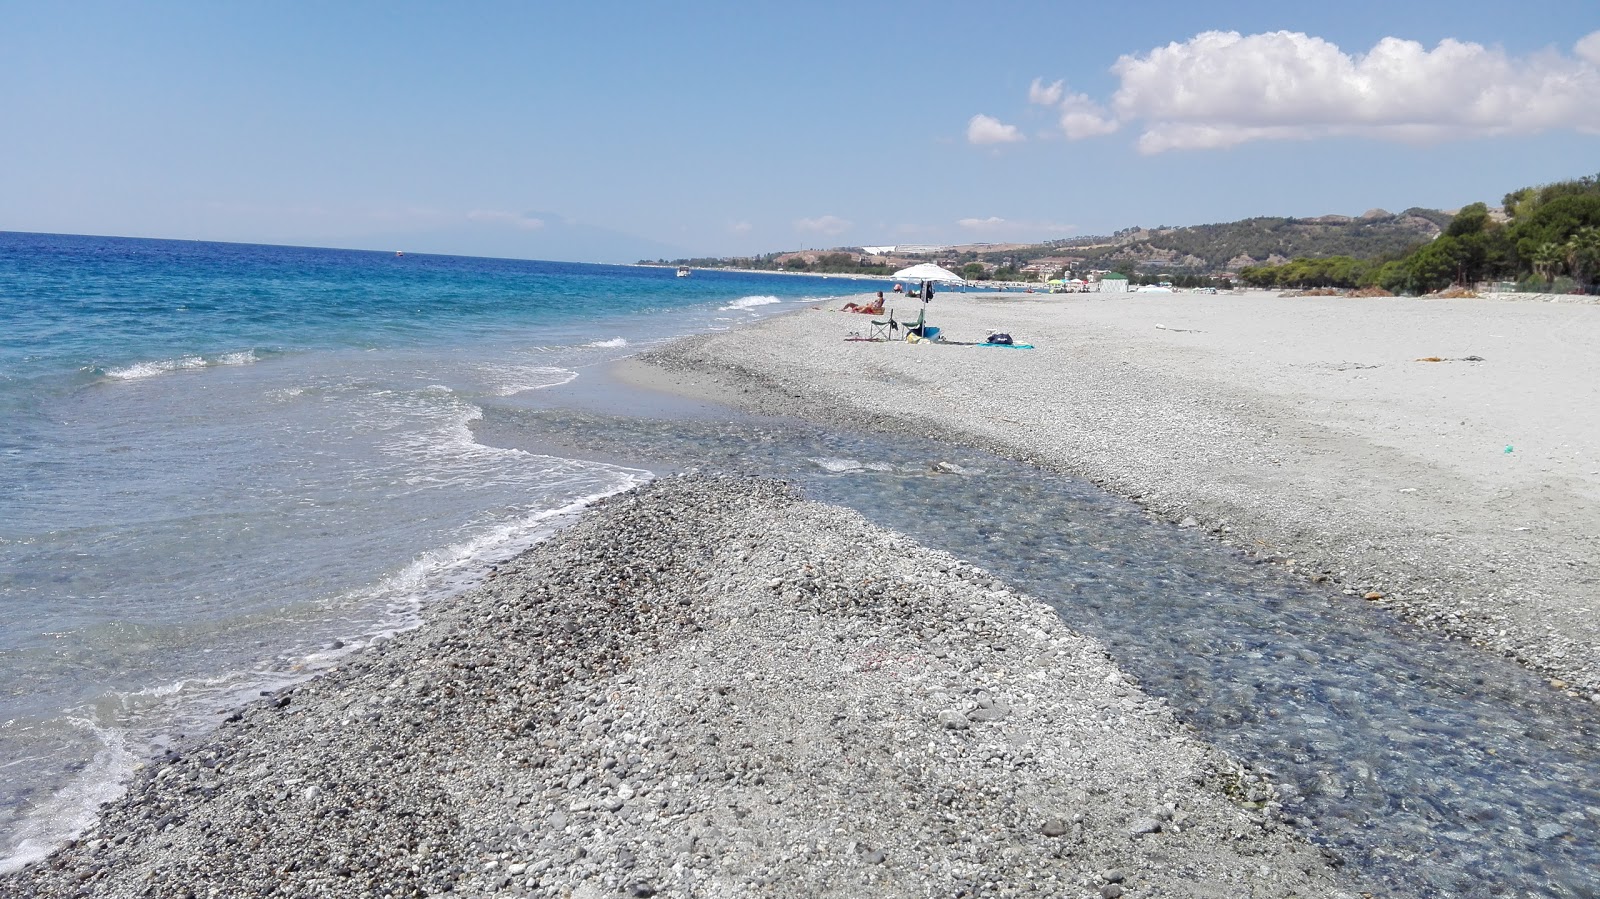 Foto de Spiaggia Cundufuri Marina com pebble fina cinza superfície